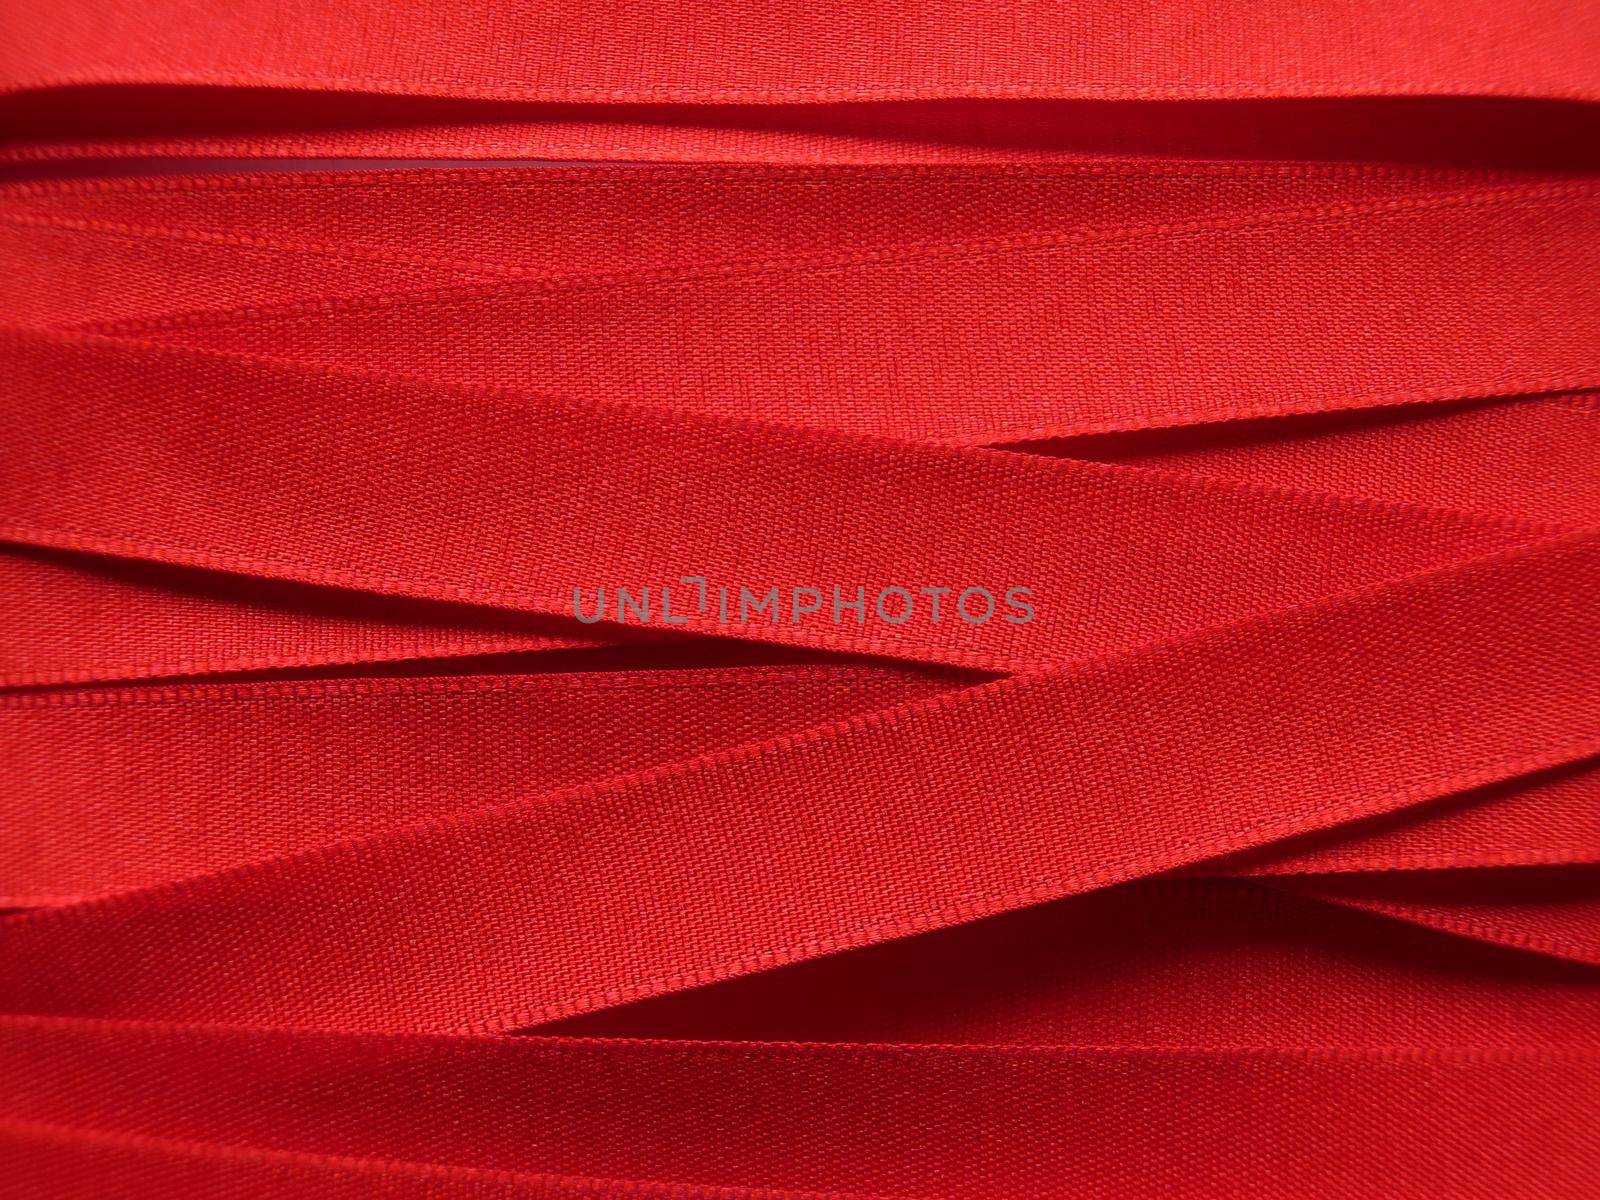 Shiny red satin ribbon background